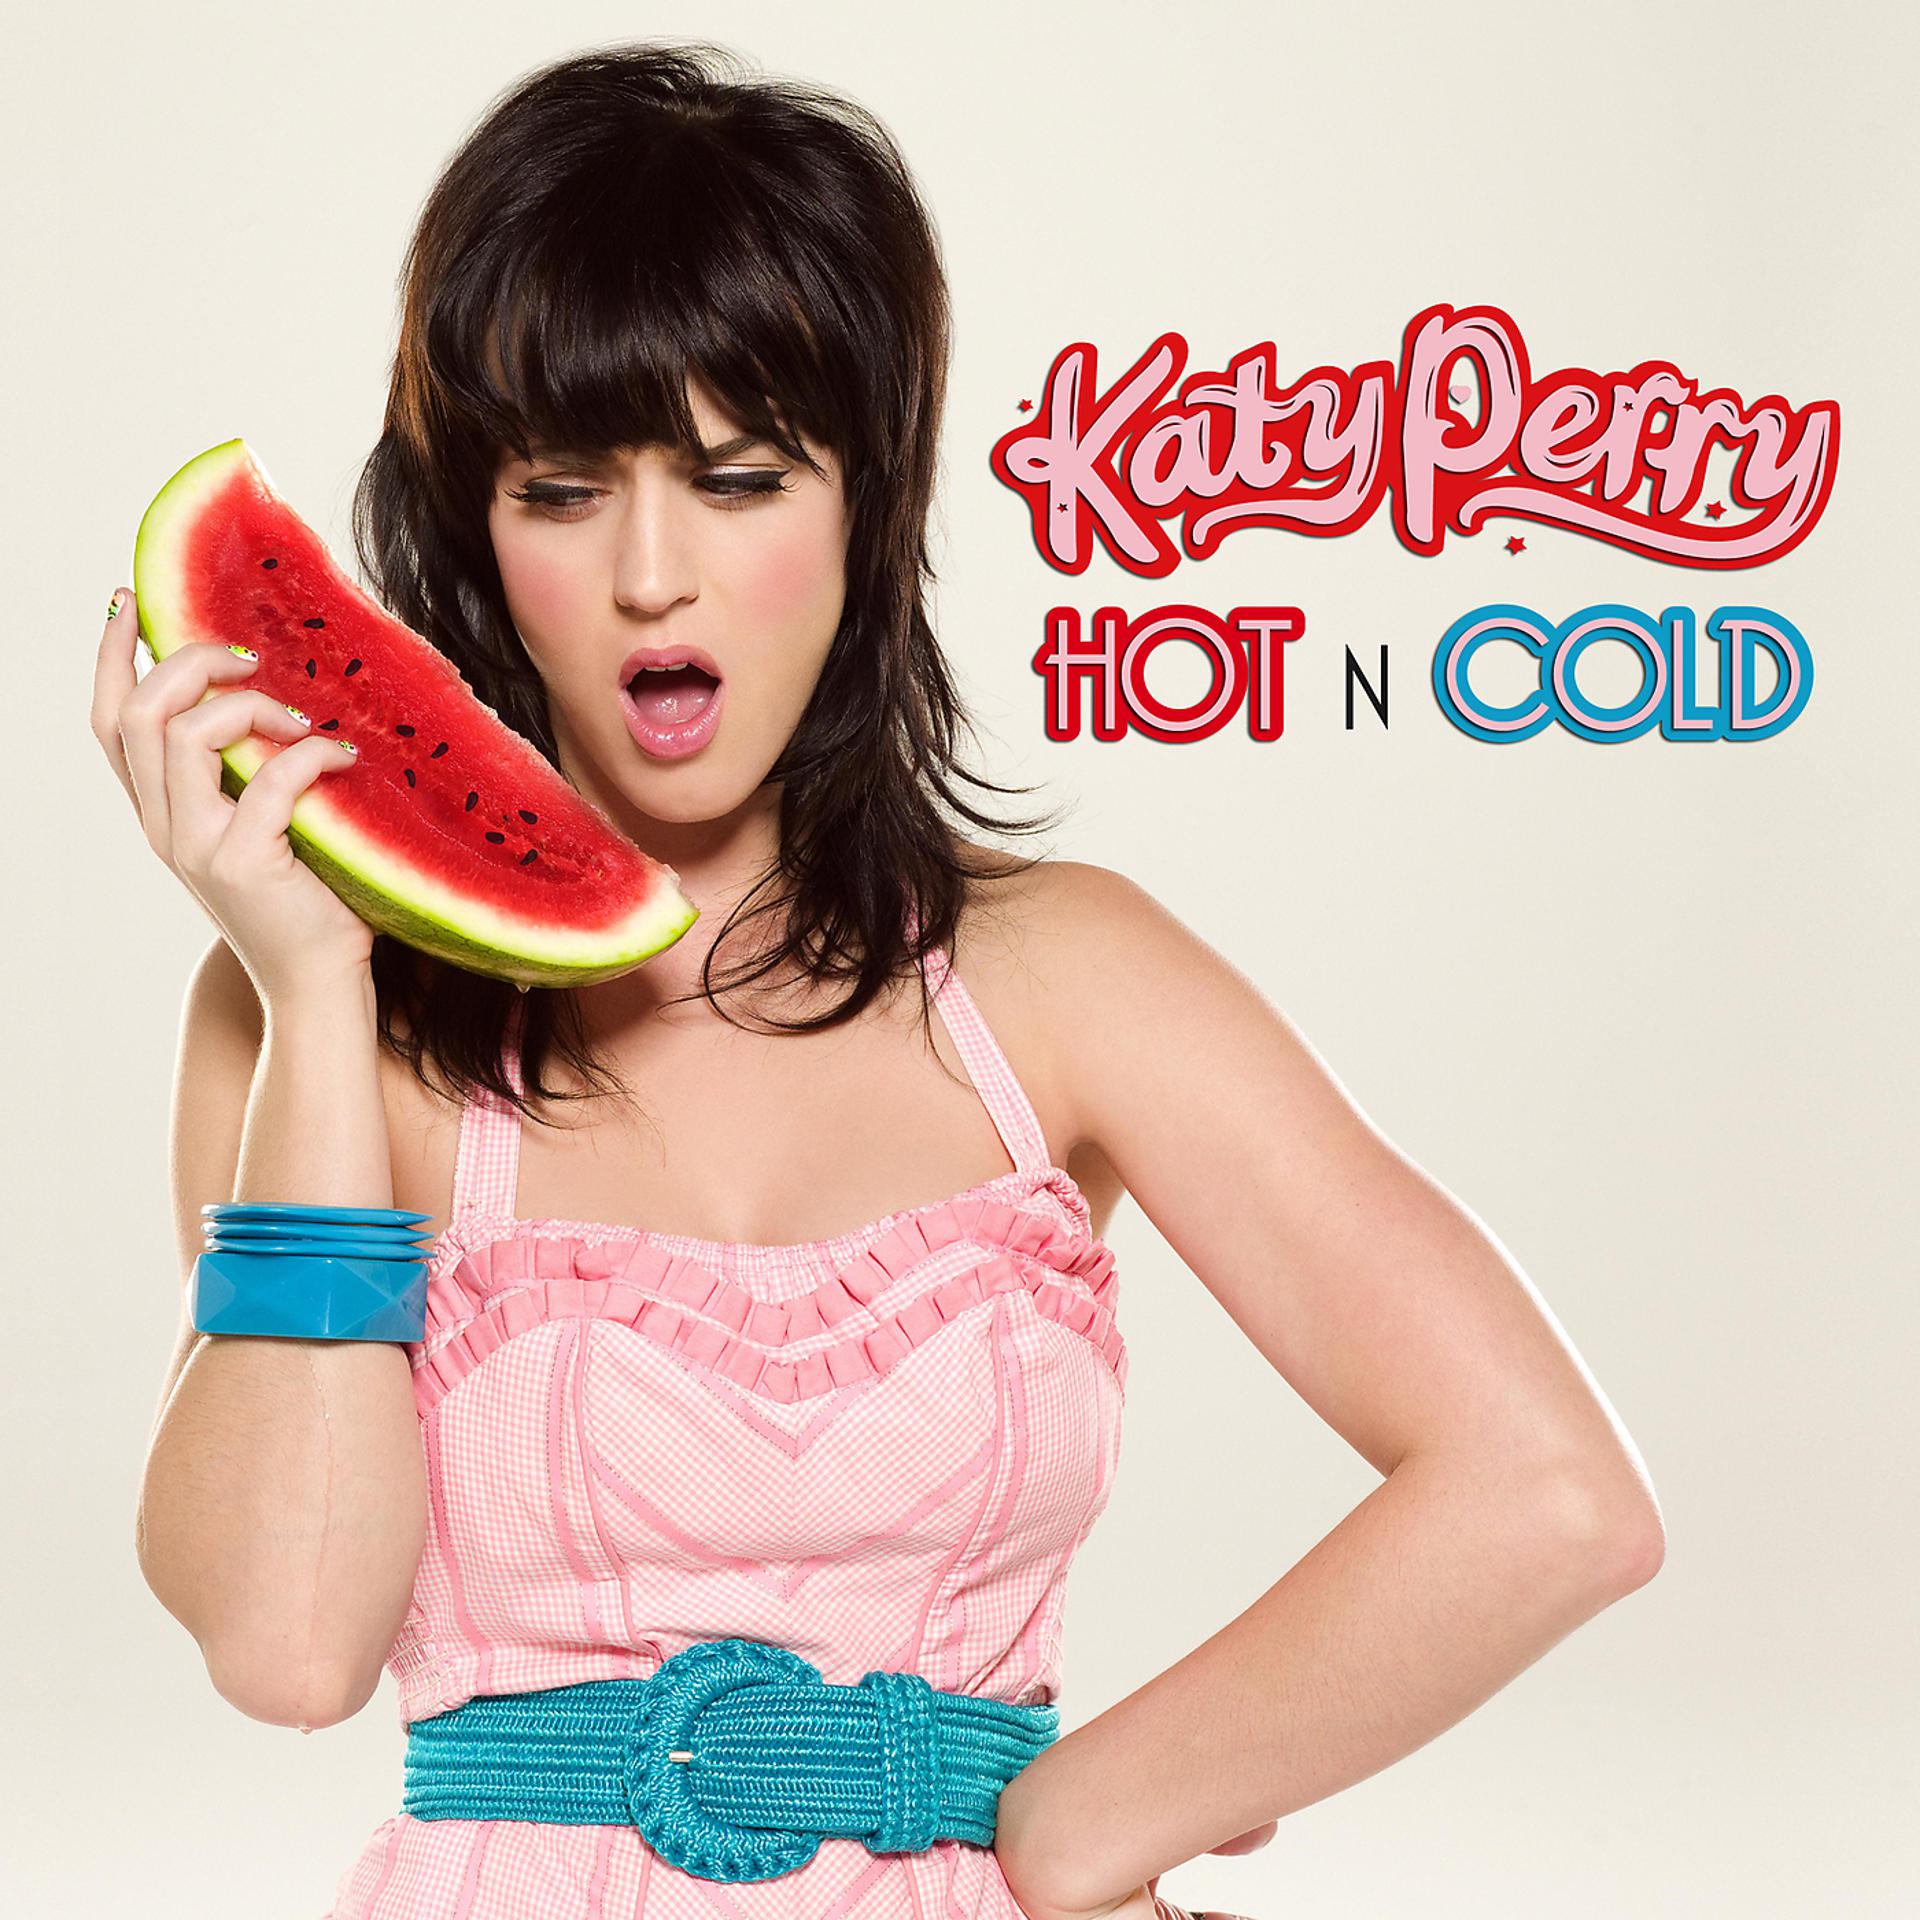 Hot cold yours. Кэти Перри hot n Cold. Кэти Перри 2008. Katy Perry hot n Cold обложка. Katy Perry обложка hot.